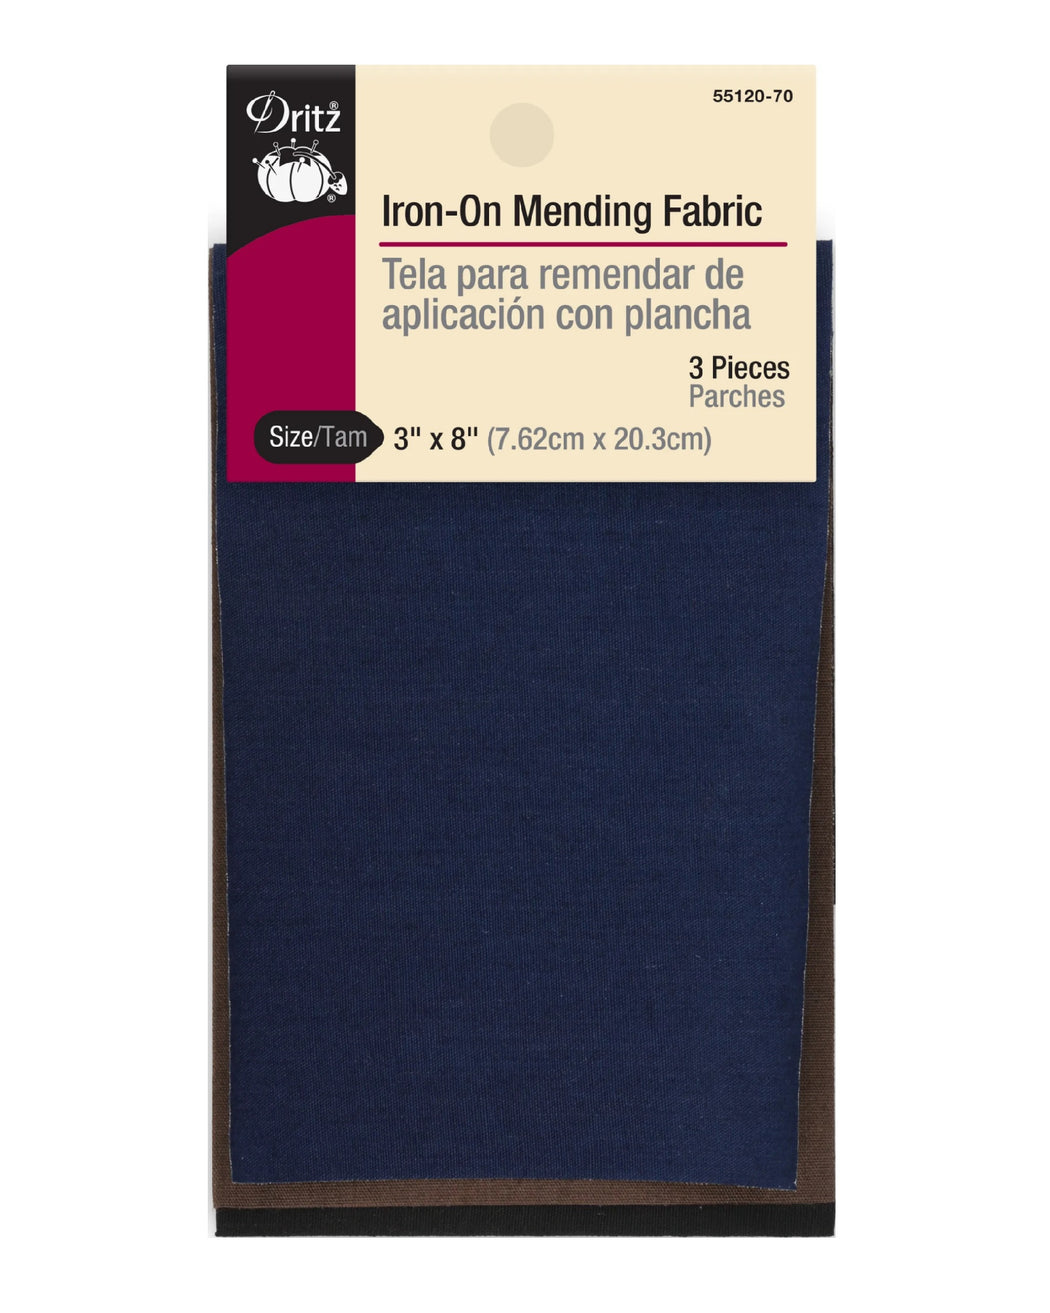 Iron-On Mending Fabric Assortment - Zipper and Thread